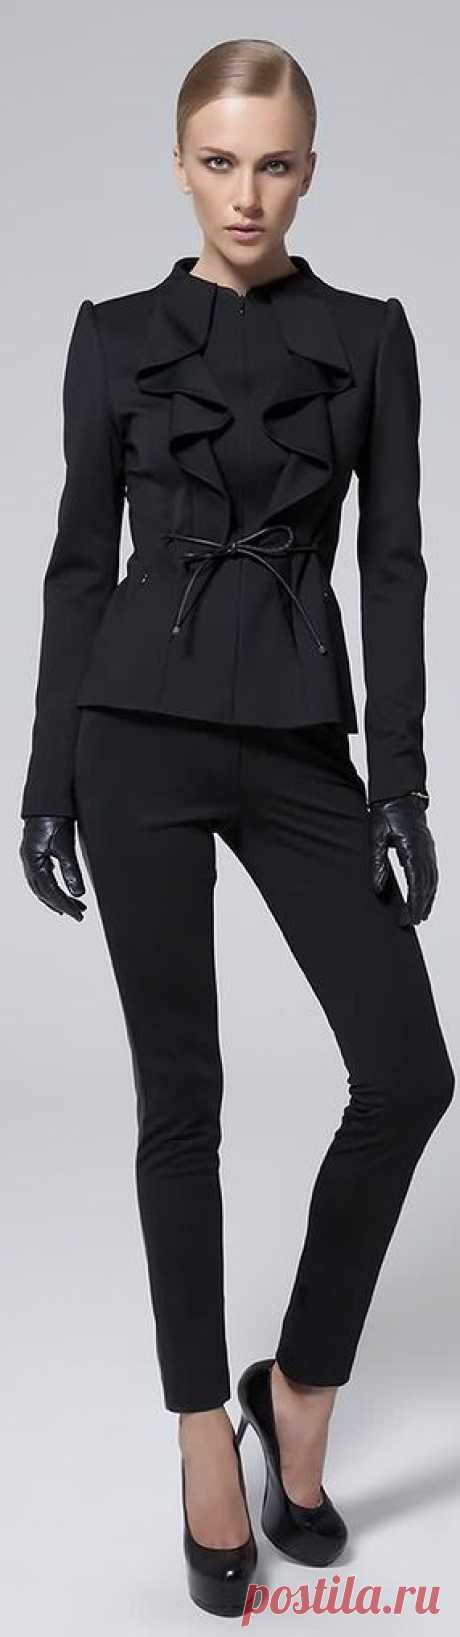 black suiting | Sacos para Dama